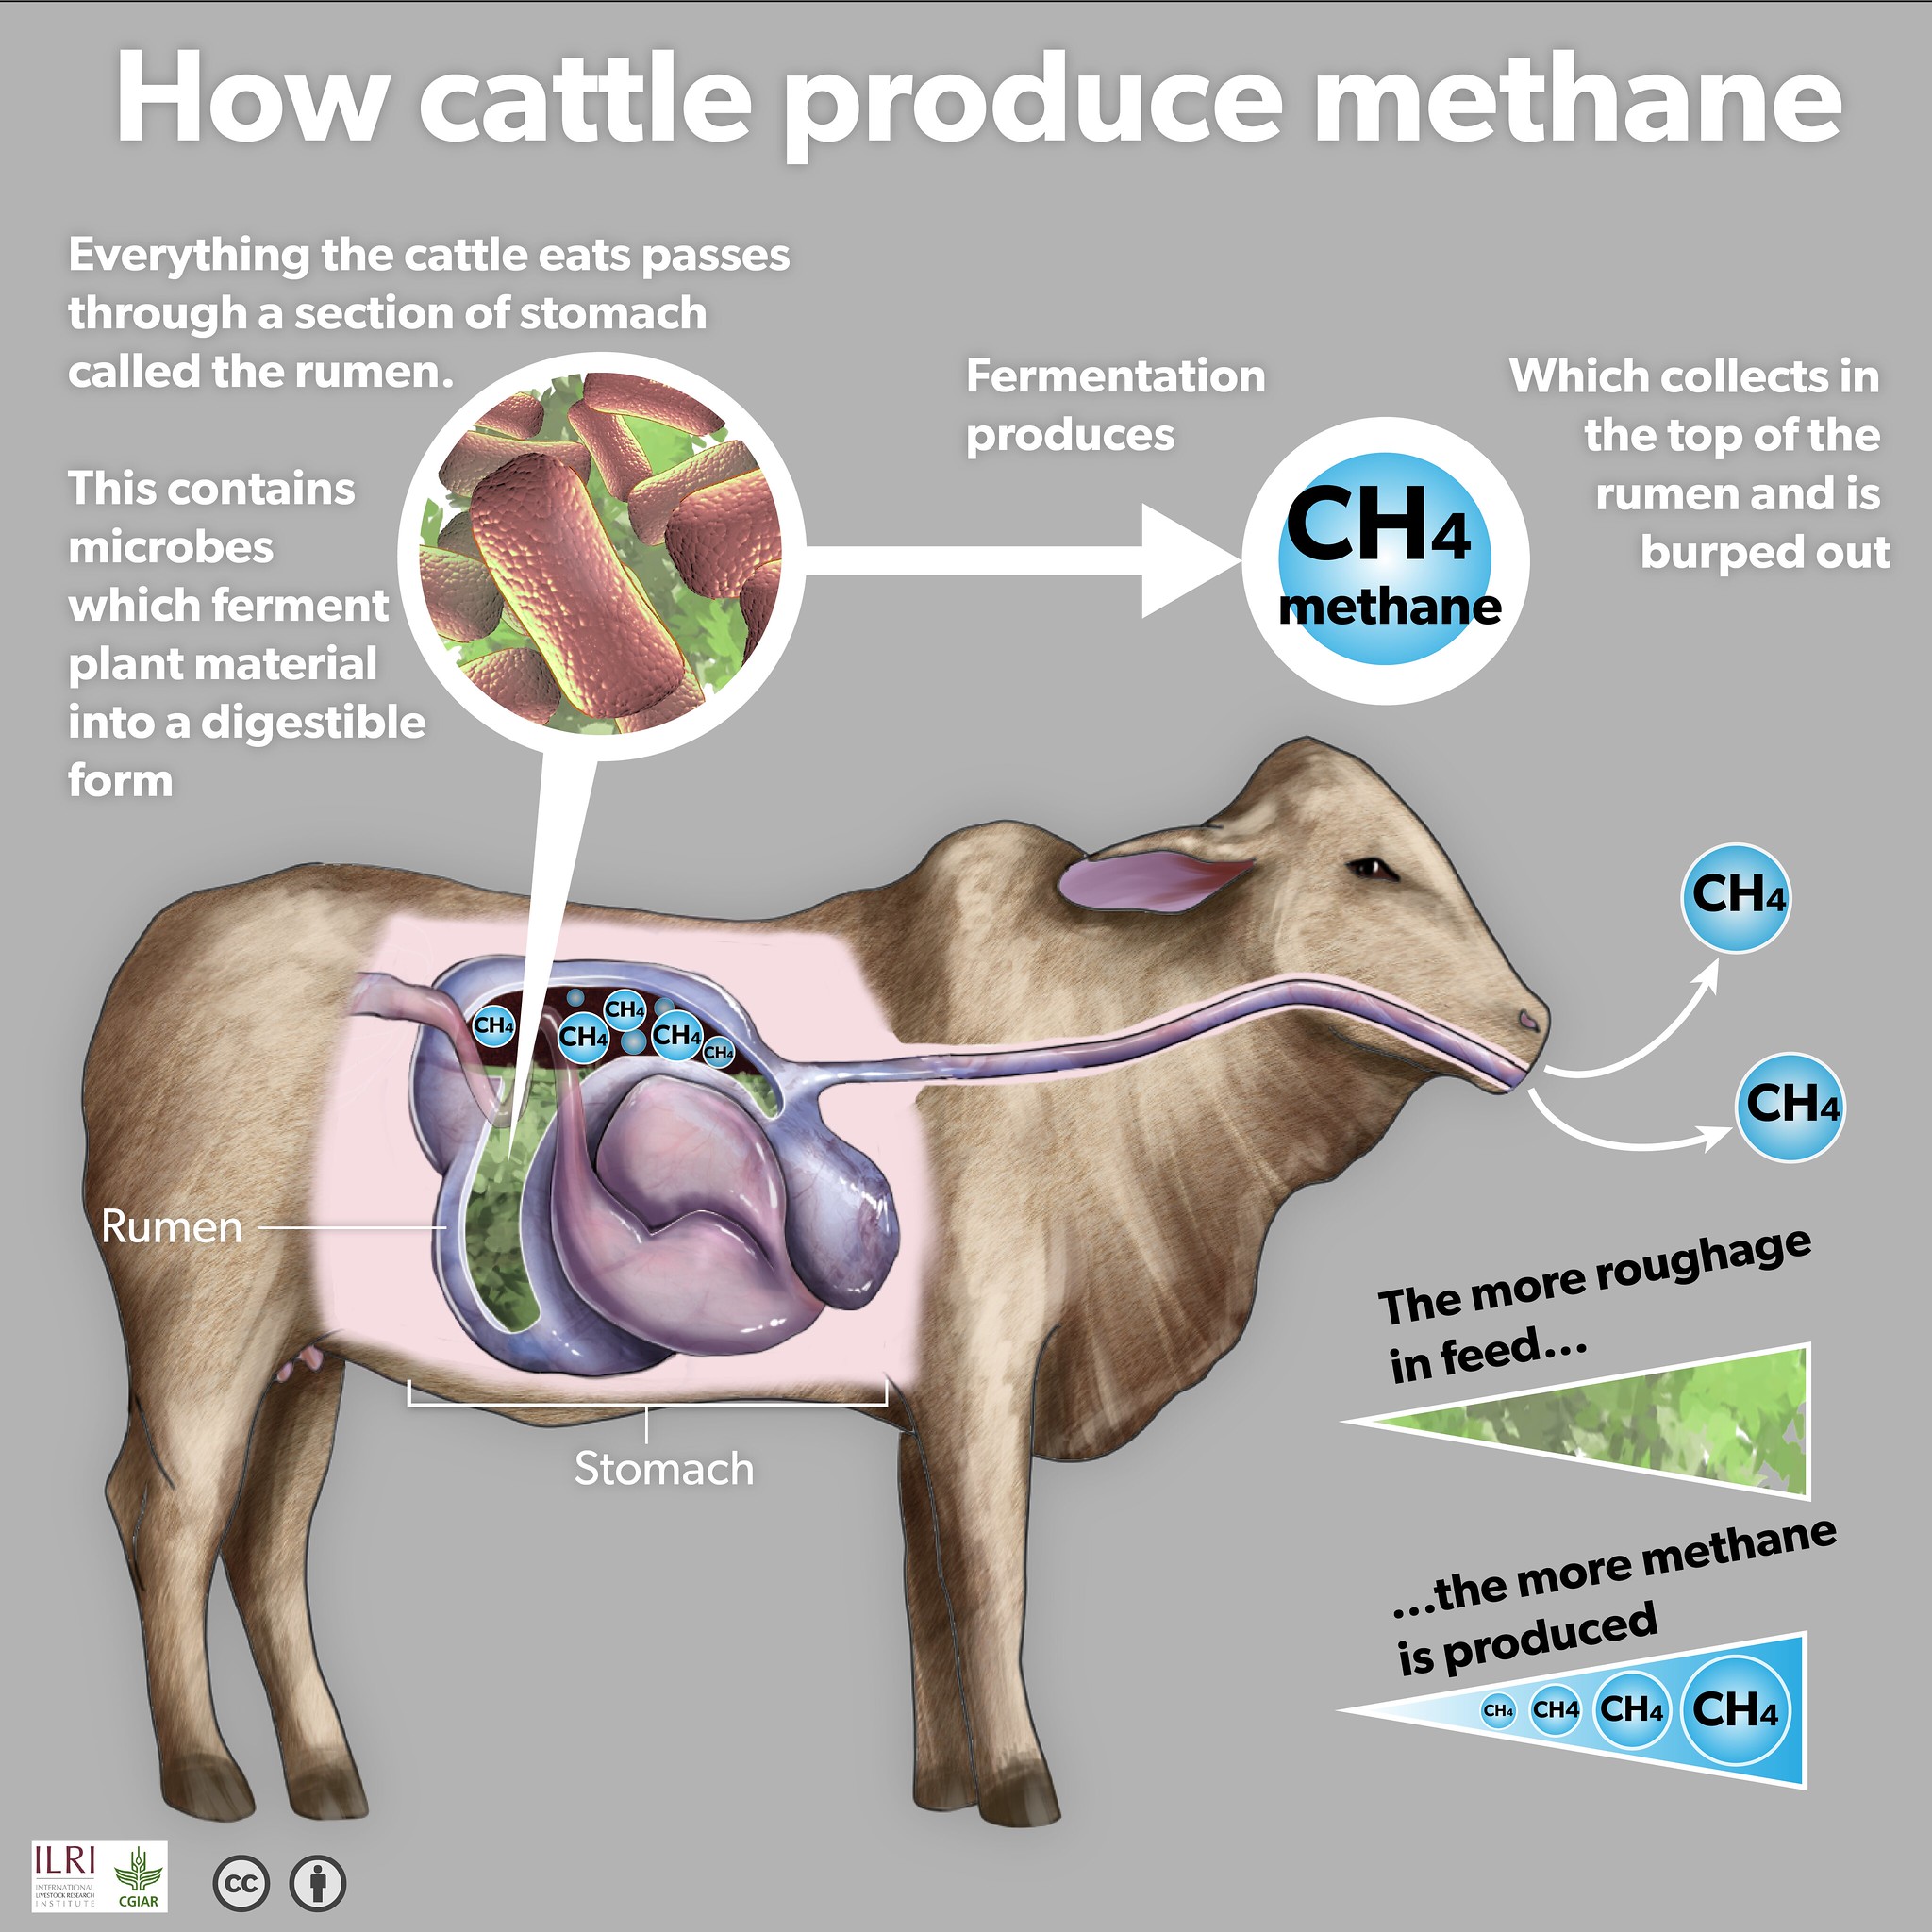 How bovines produce methane